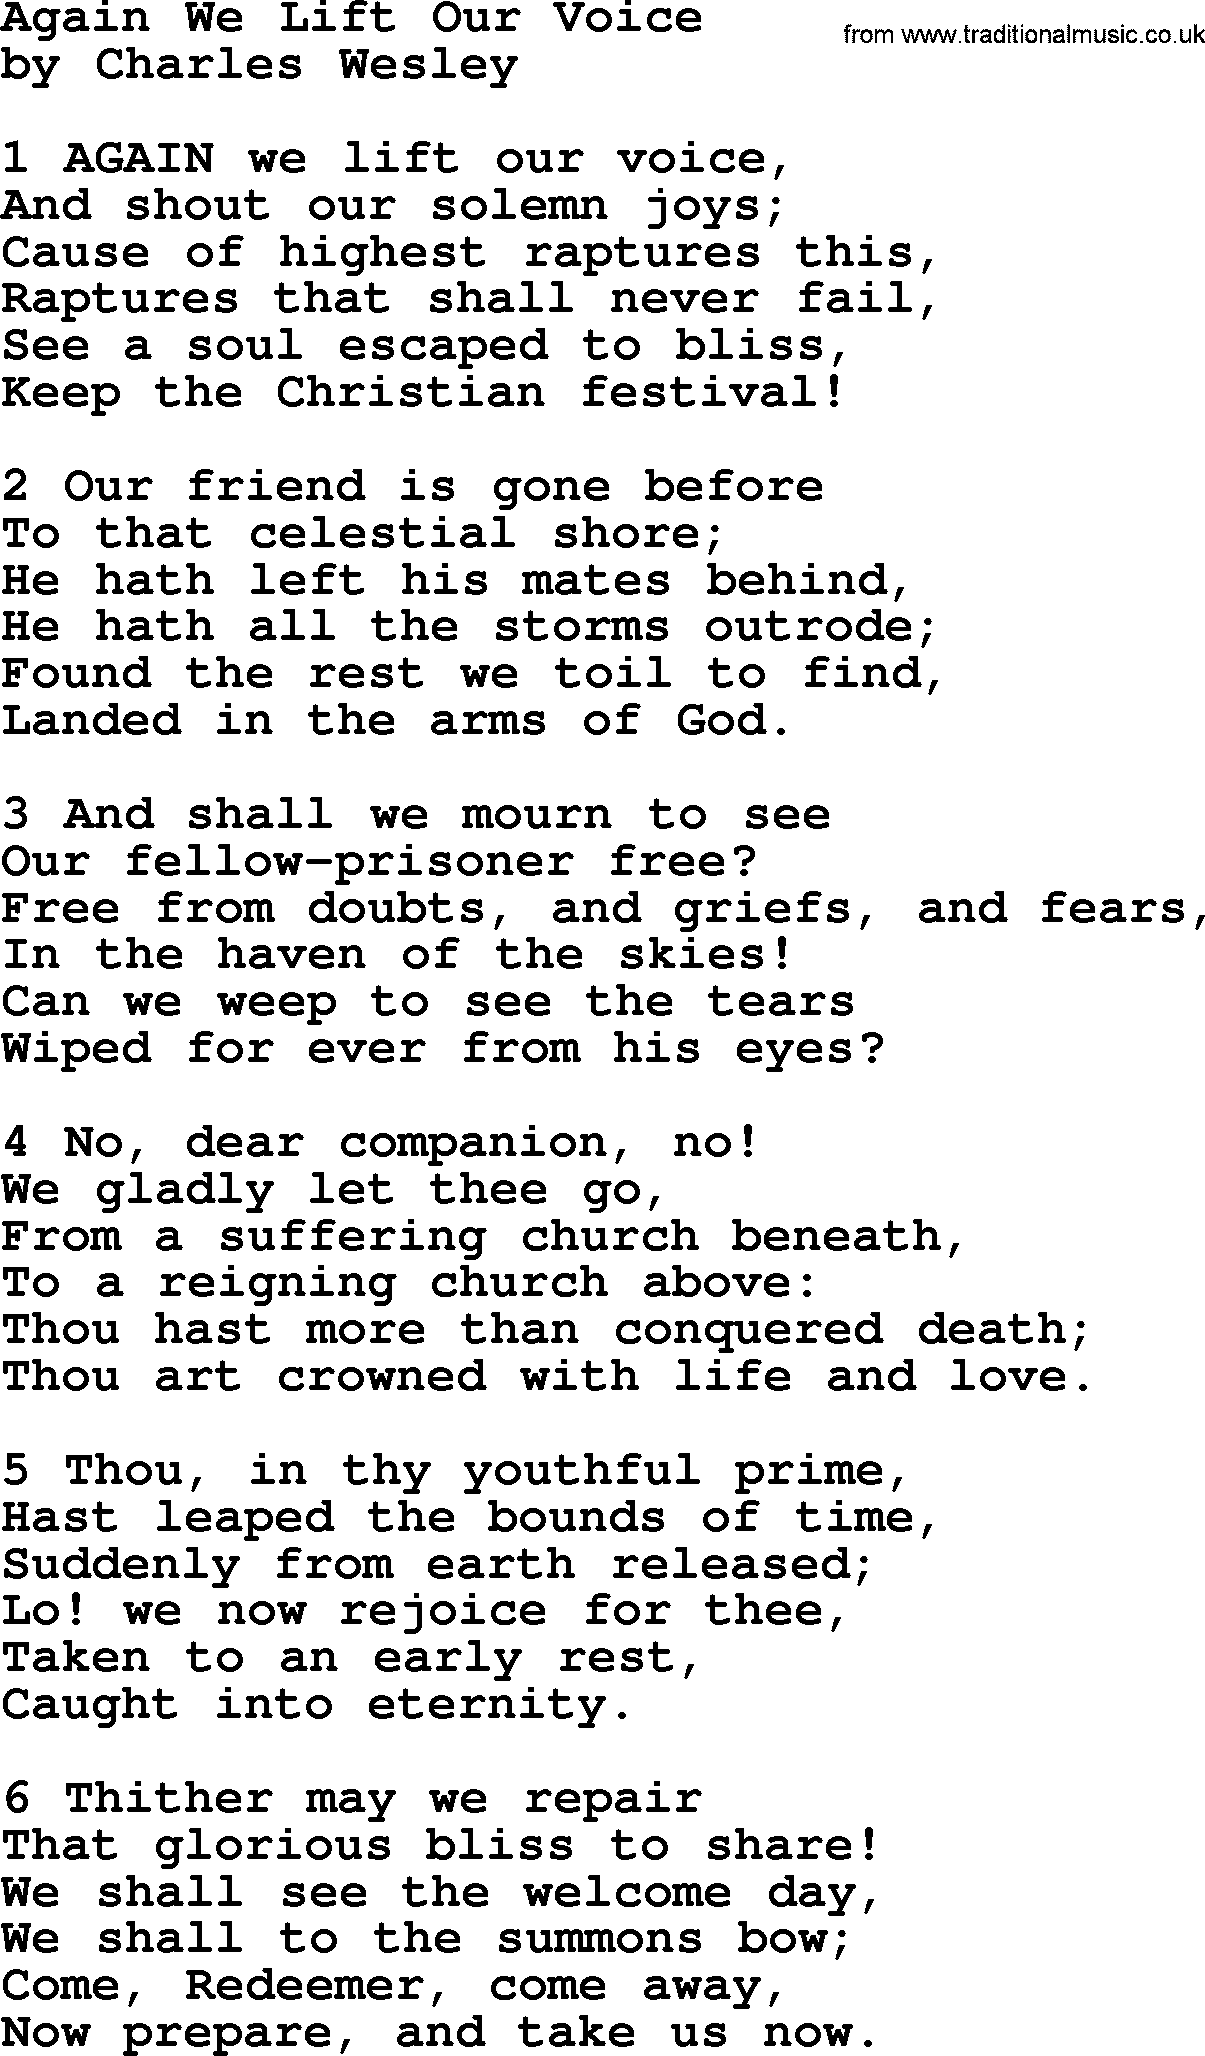 Charles Wesley hymn: Again We Lift Our Voice, lyrics